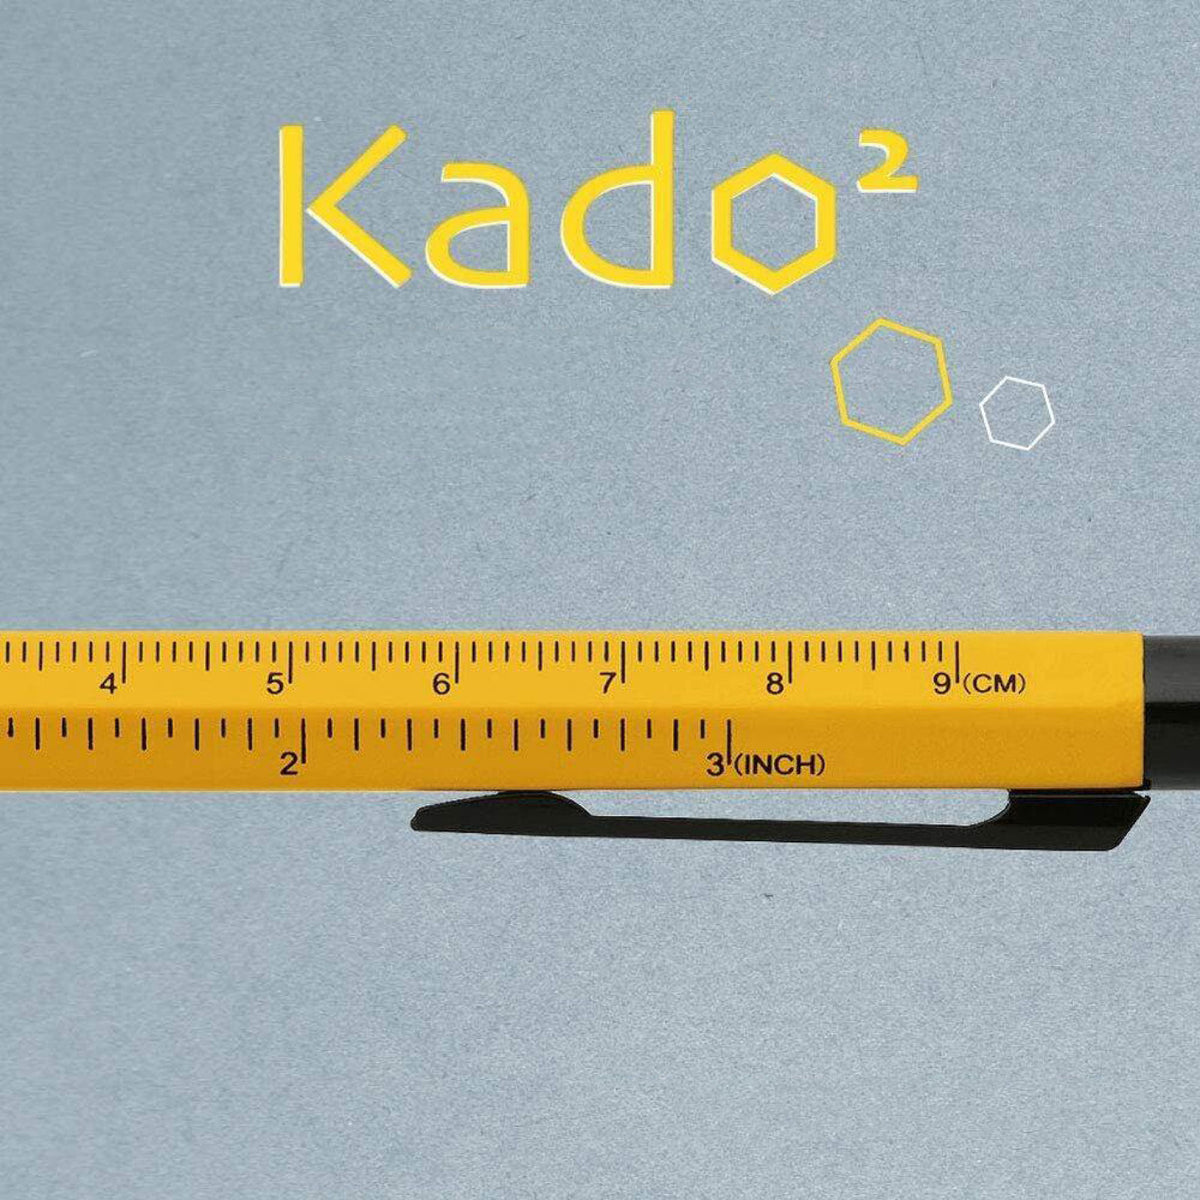 Zebra - Ballpoint Pen - Kado2 - Red